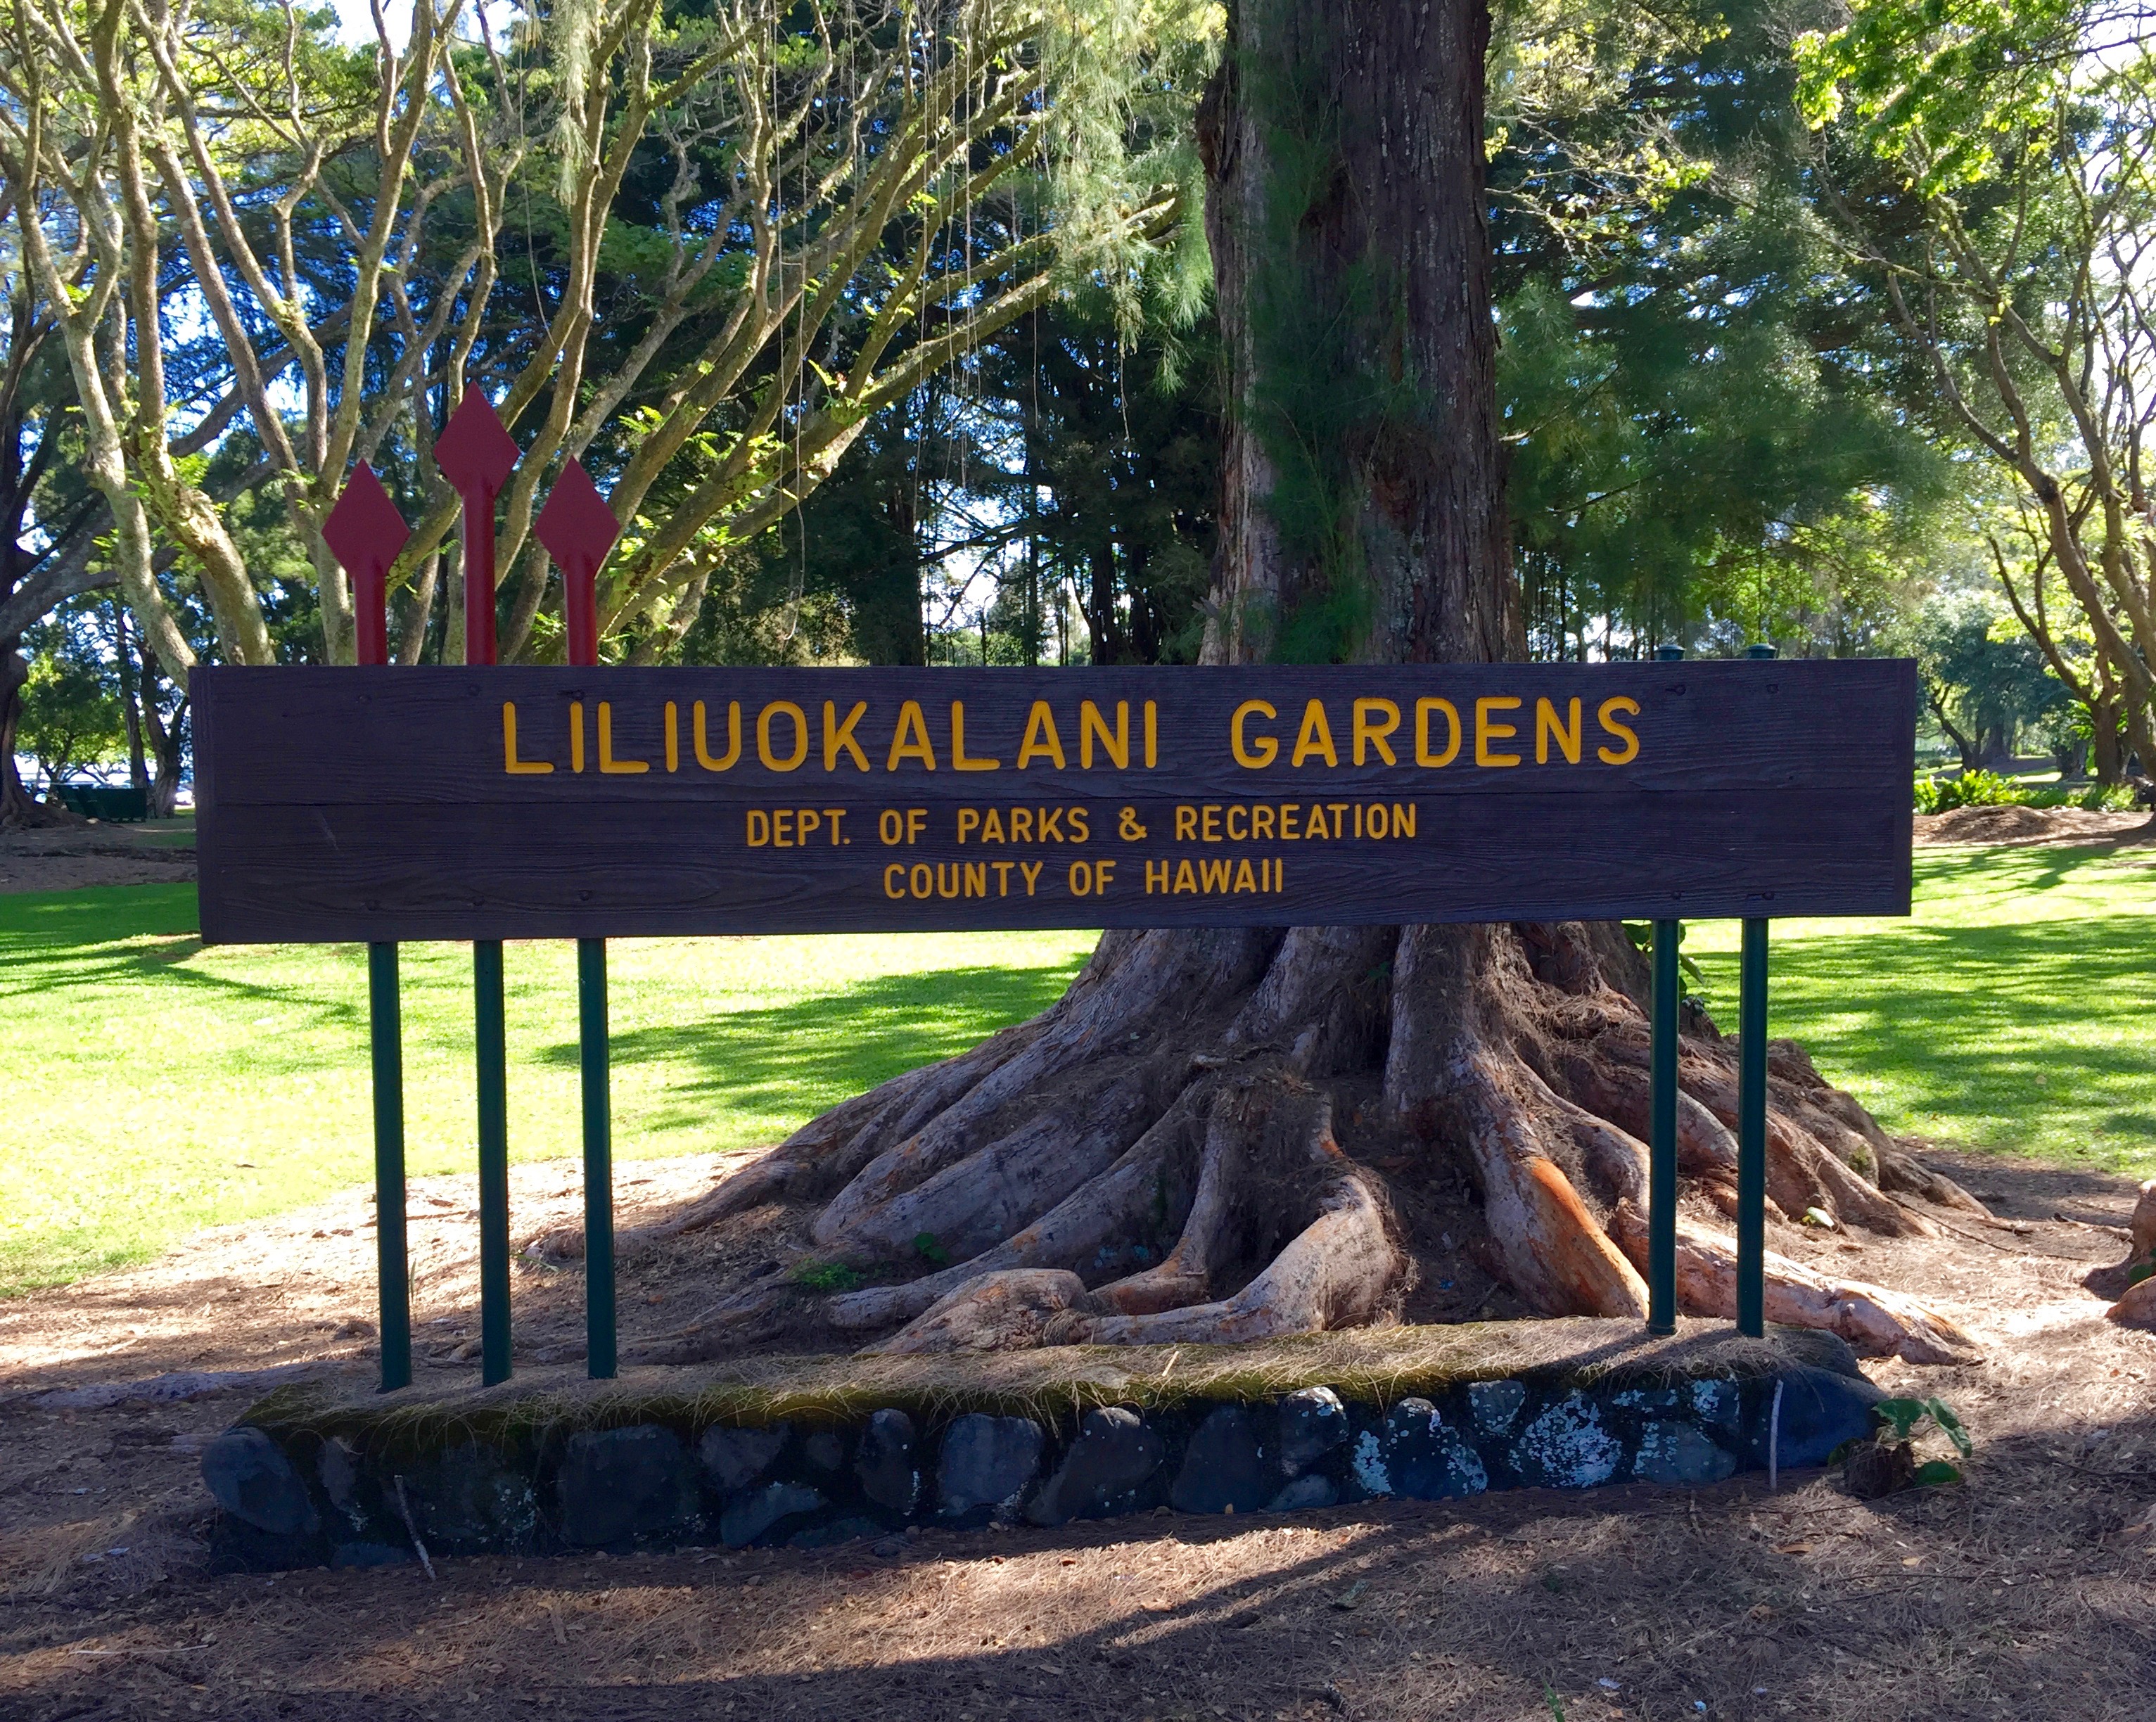 Liliuokalani Gardens: An Oasis in Time